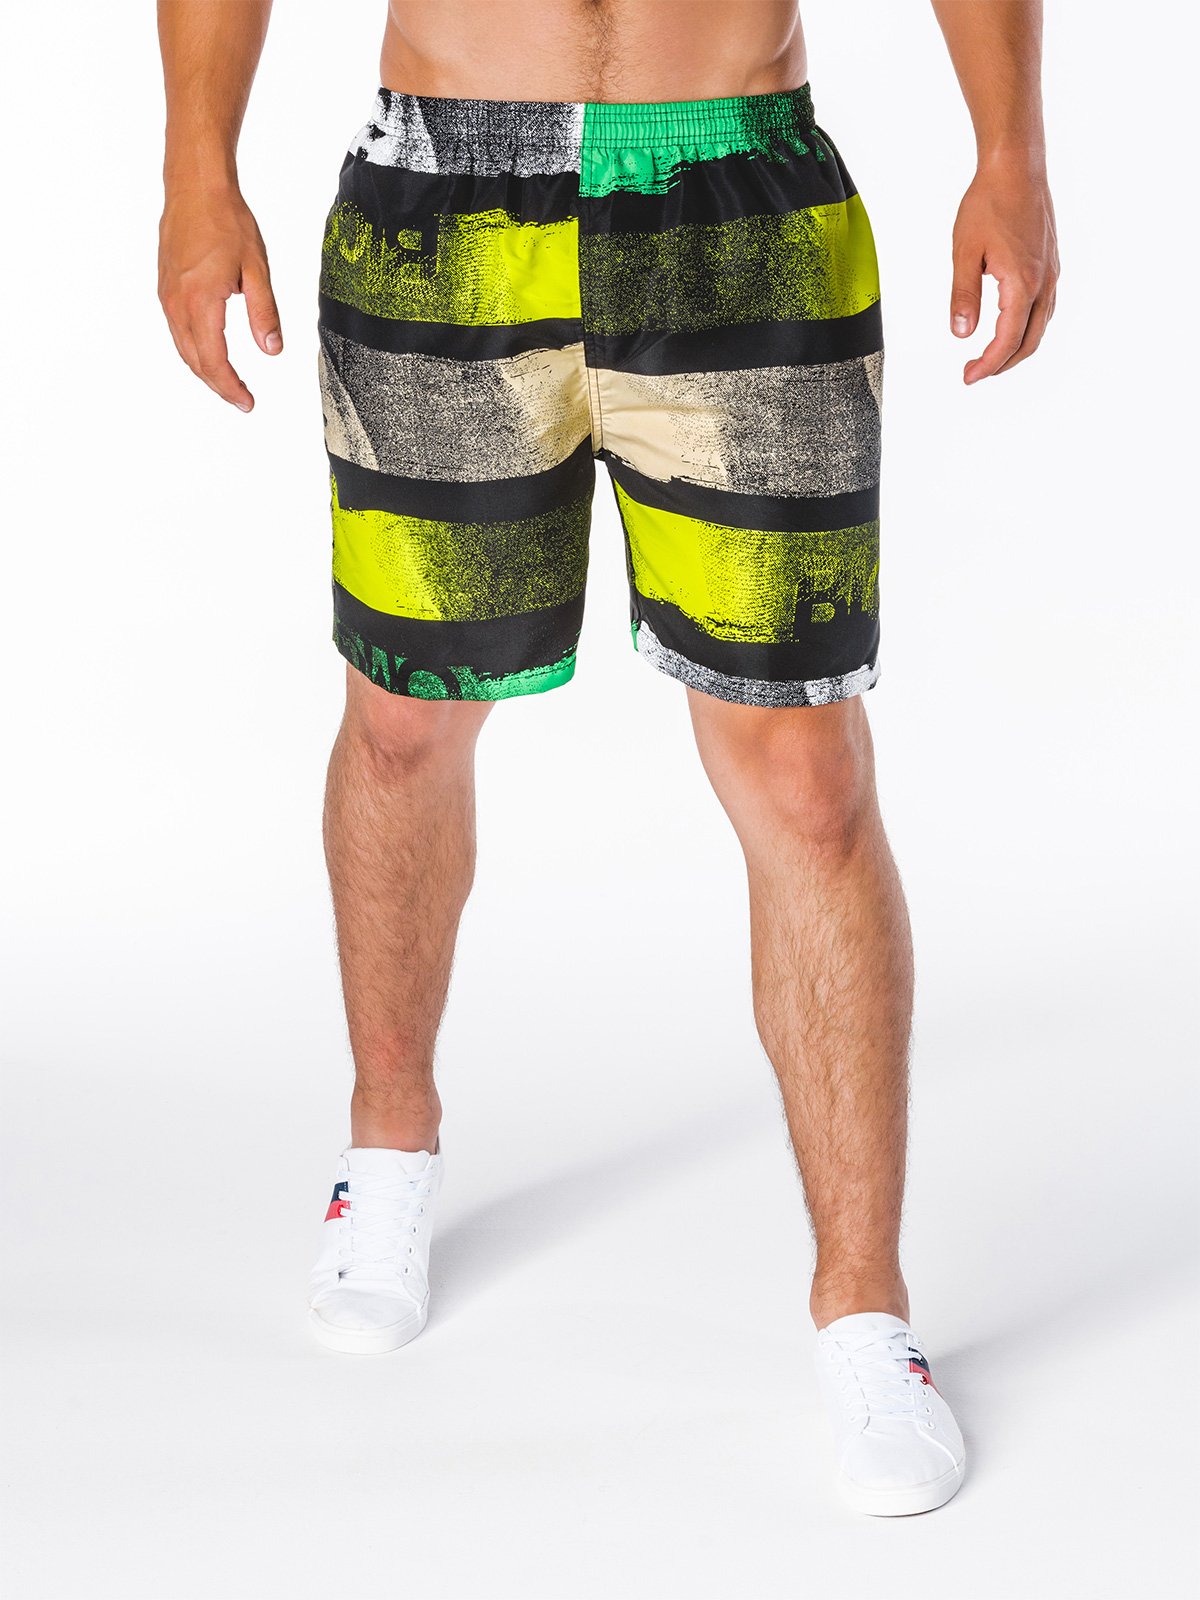 Men's shorts W093 - black/green | MODONE wholesale - Clothing For Men